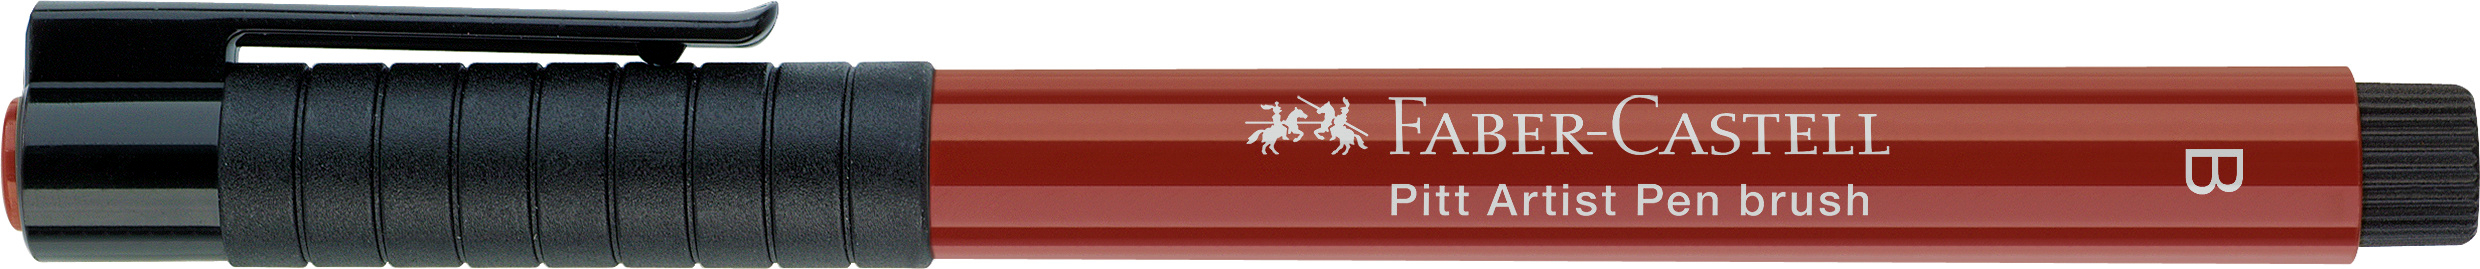 FABER-CASTELL Pitt Artist Pen Brush 2.5mm 167492 india red india red